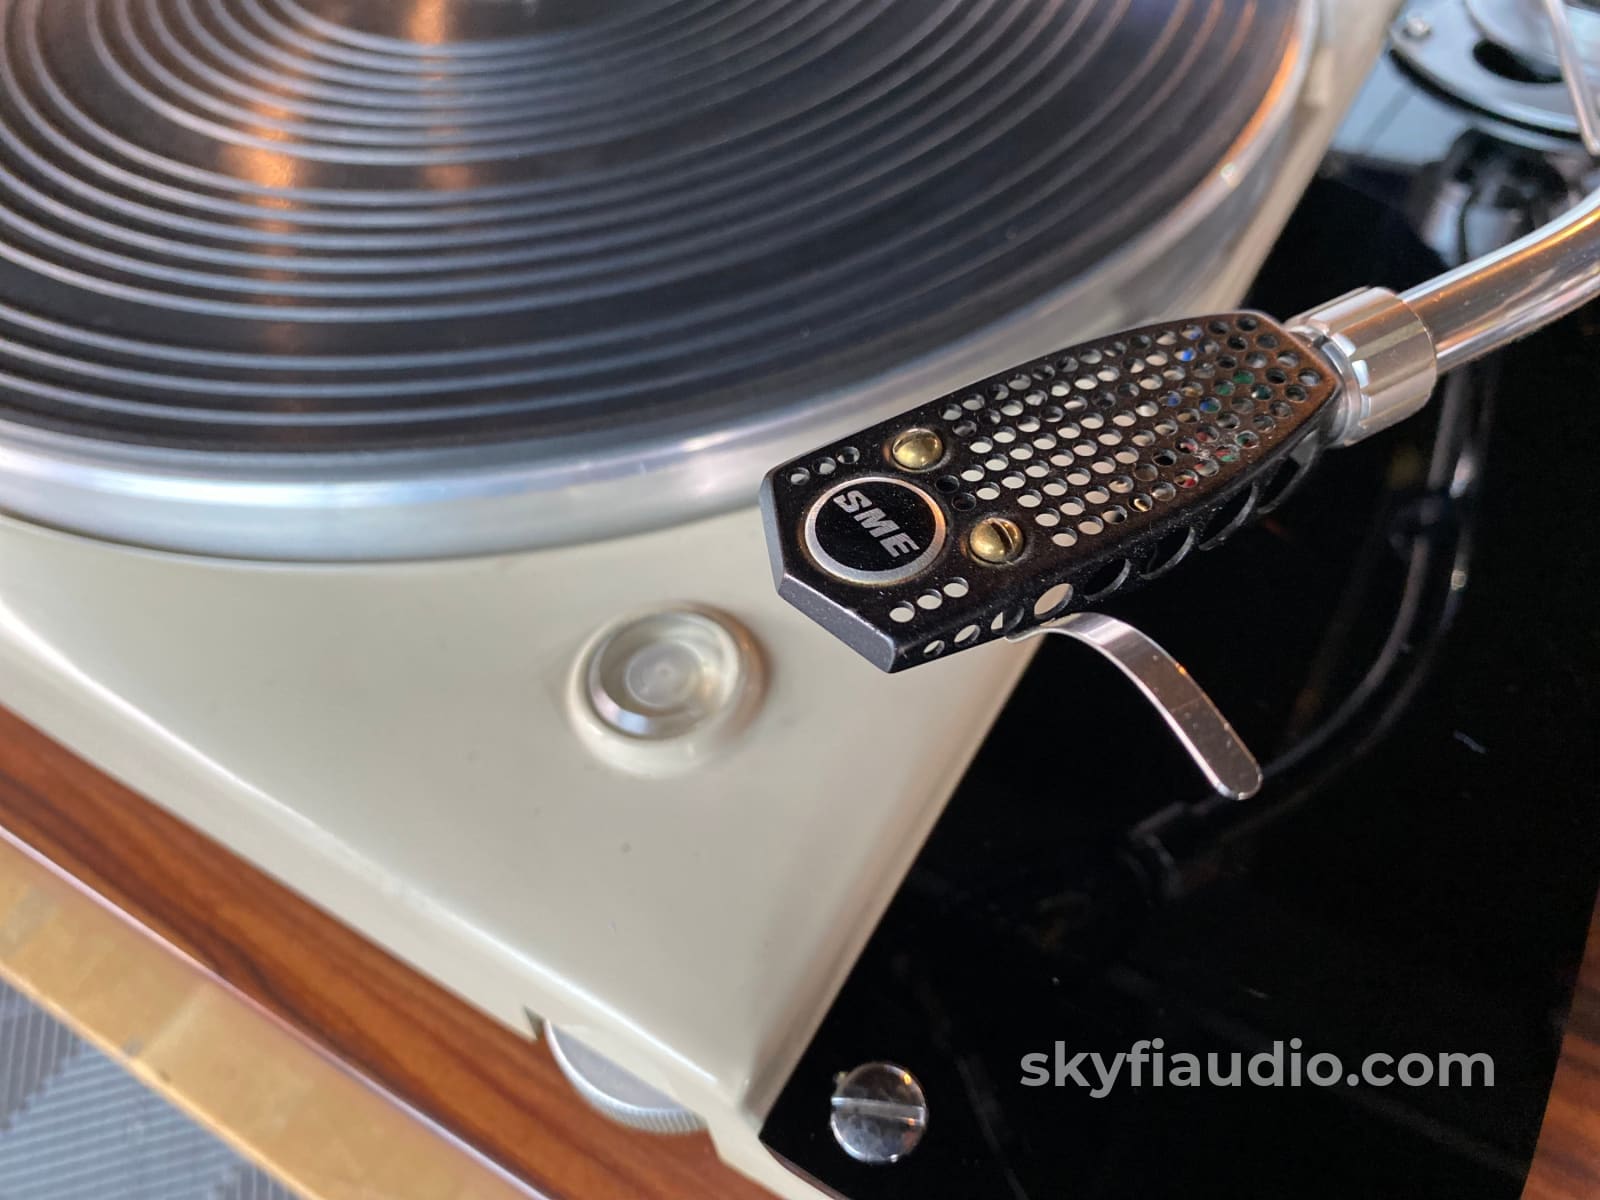 Thorens Td-124 Skyfi Custom Turntable W/Sme Tonearm And New Walnut Plinth